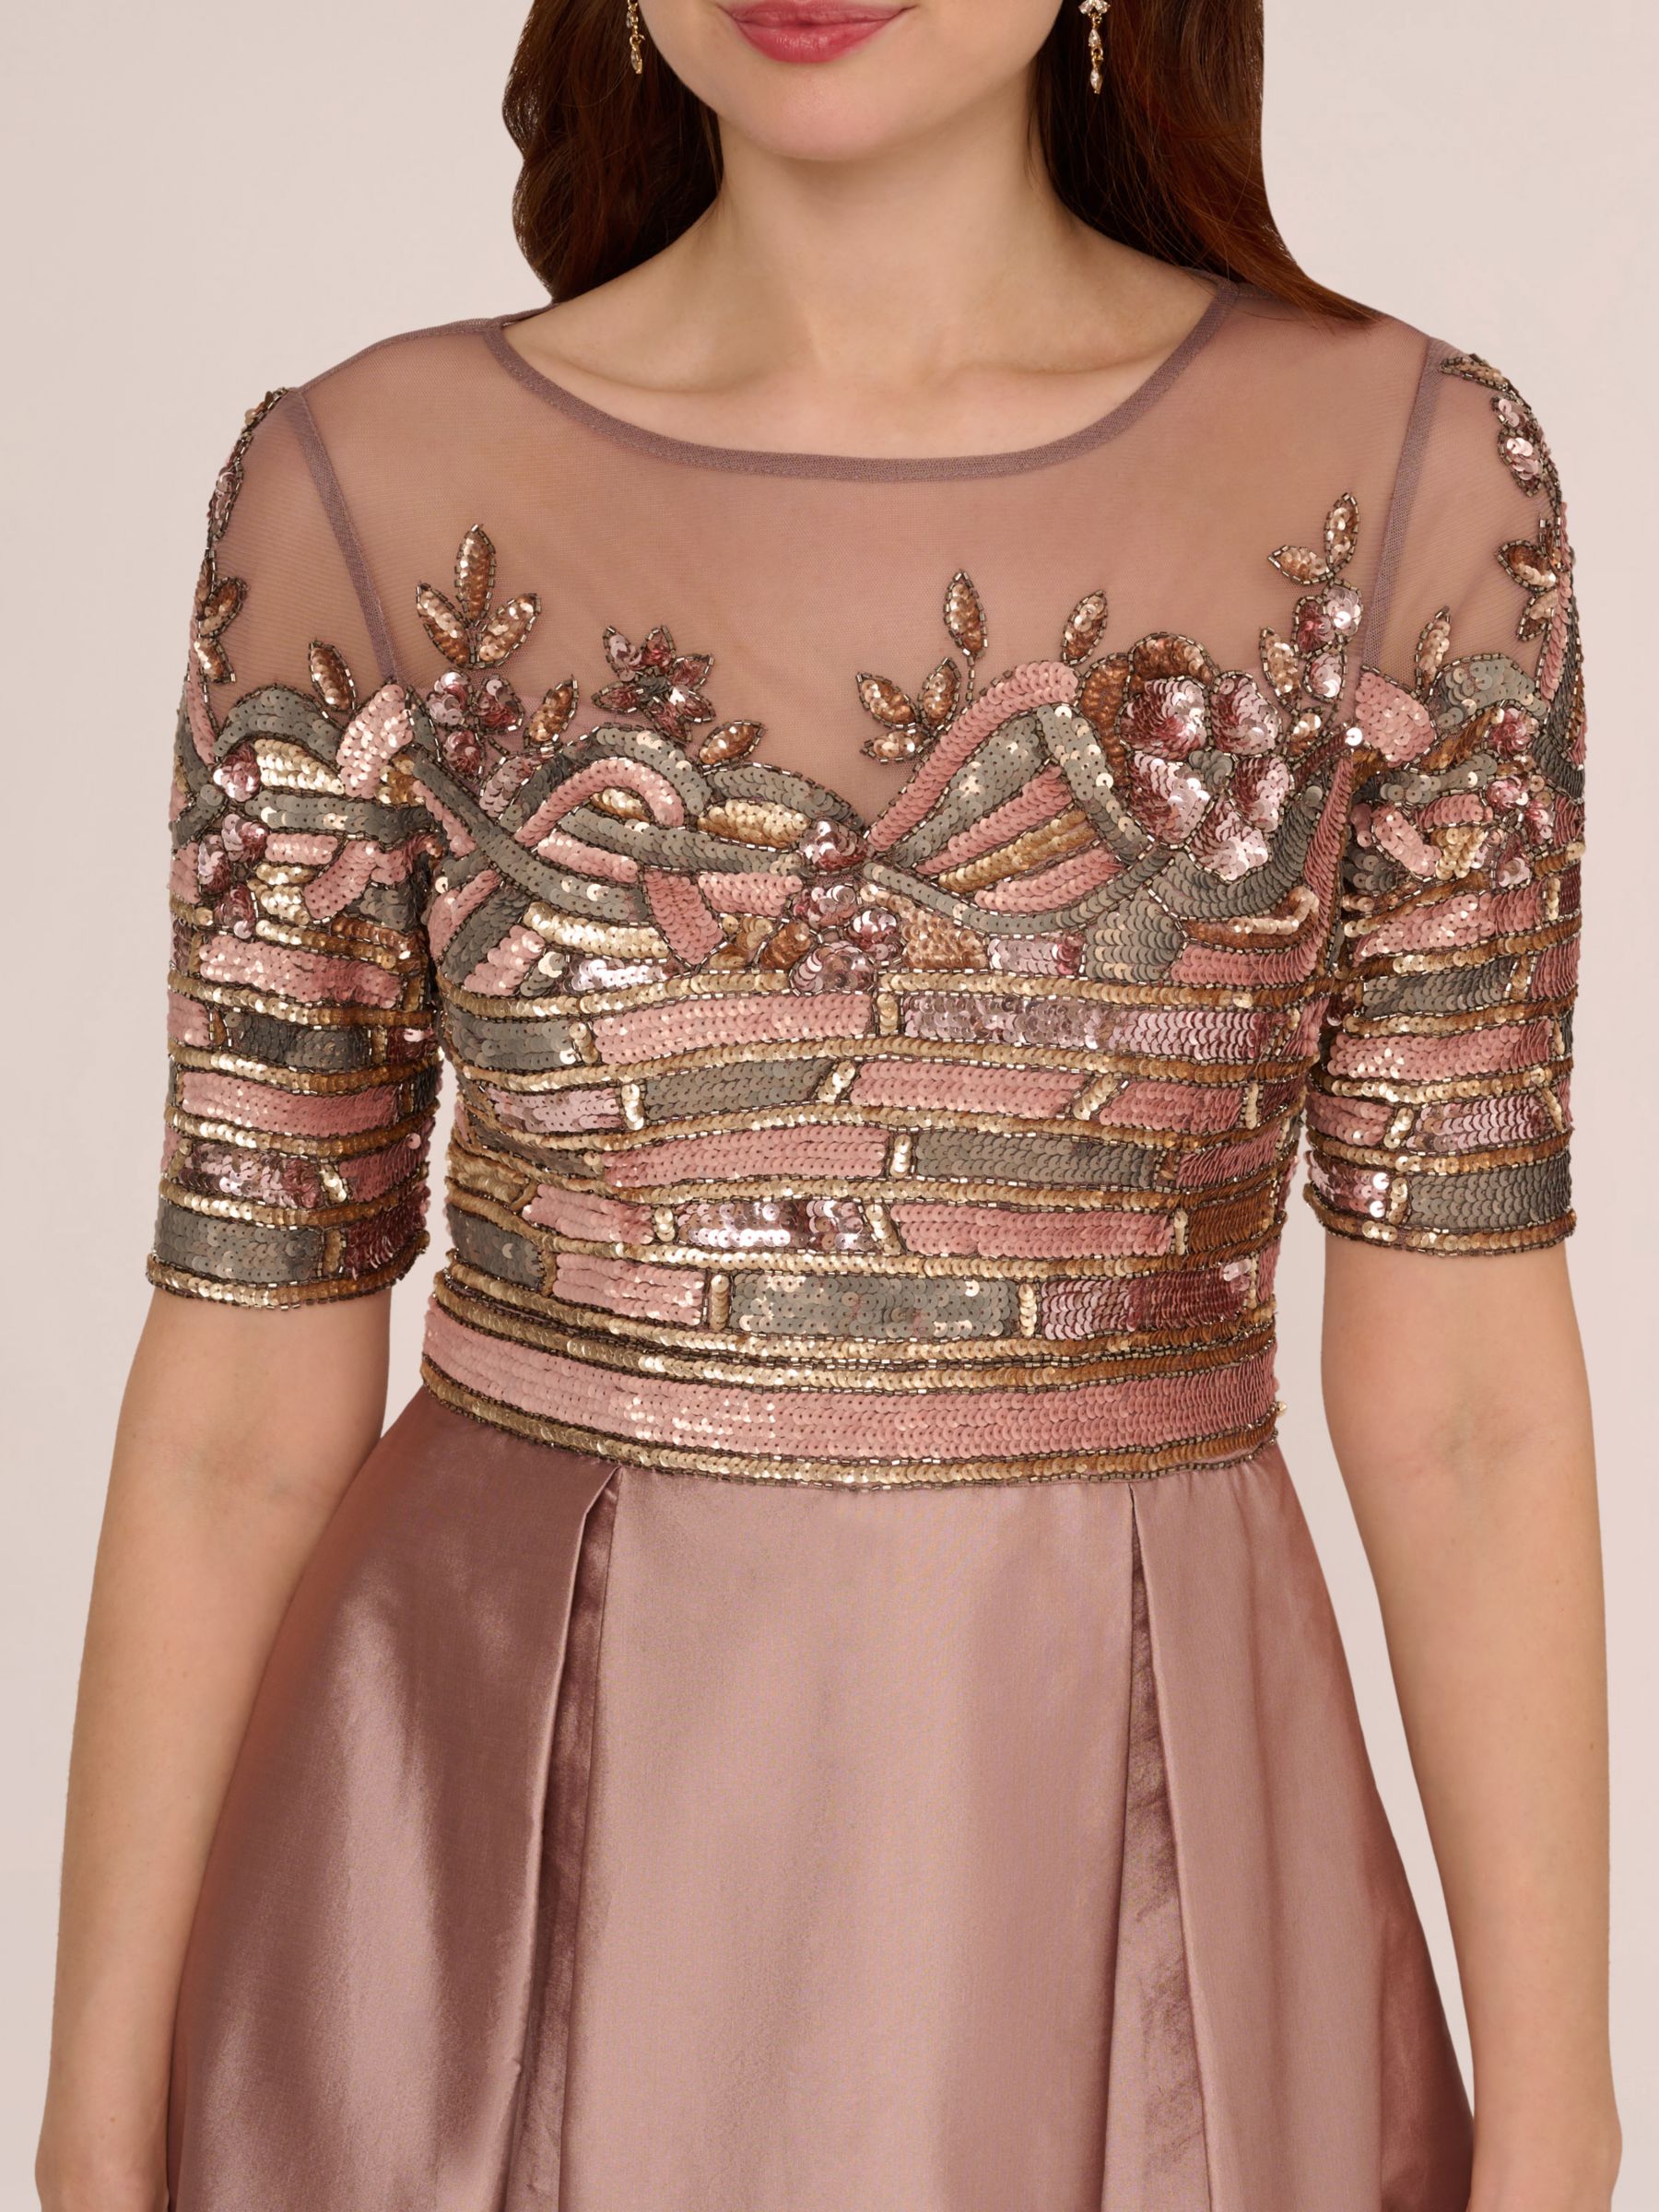 Adrianna Papell Embellished Tafetta Dress Maxi Dress, Stone, 6